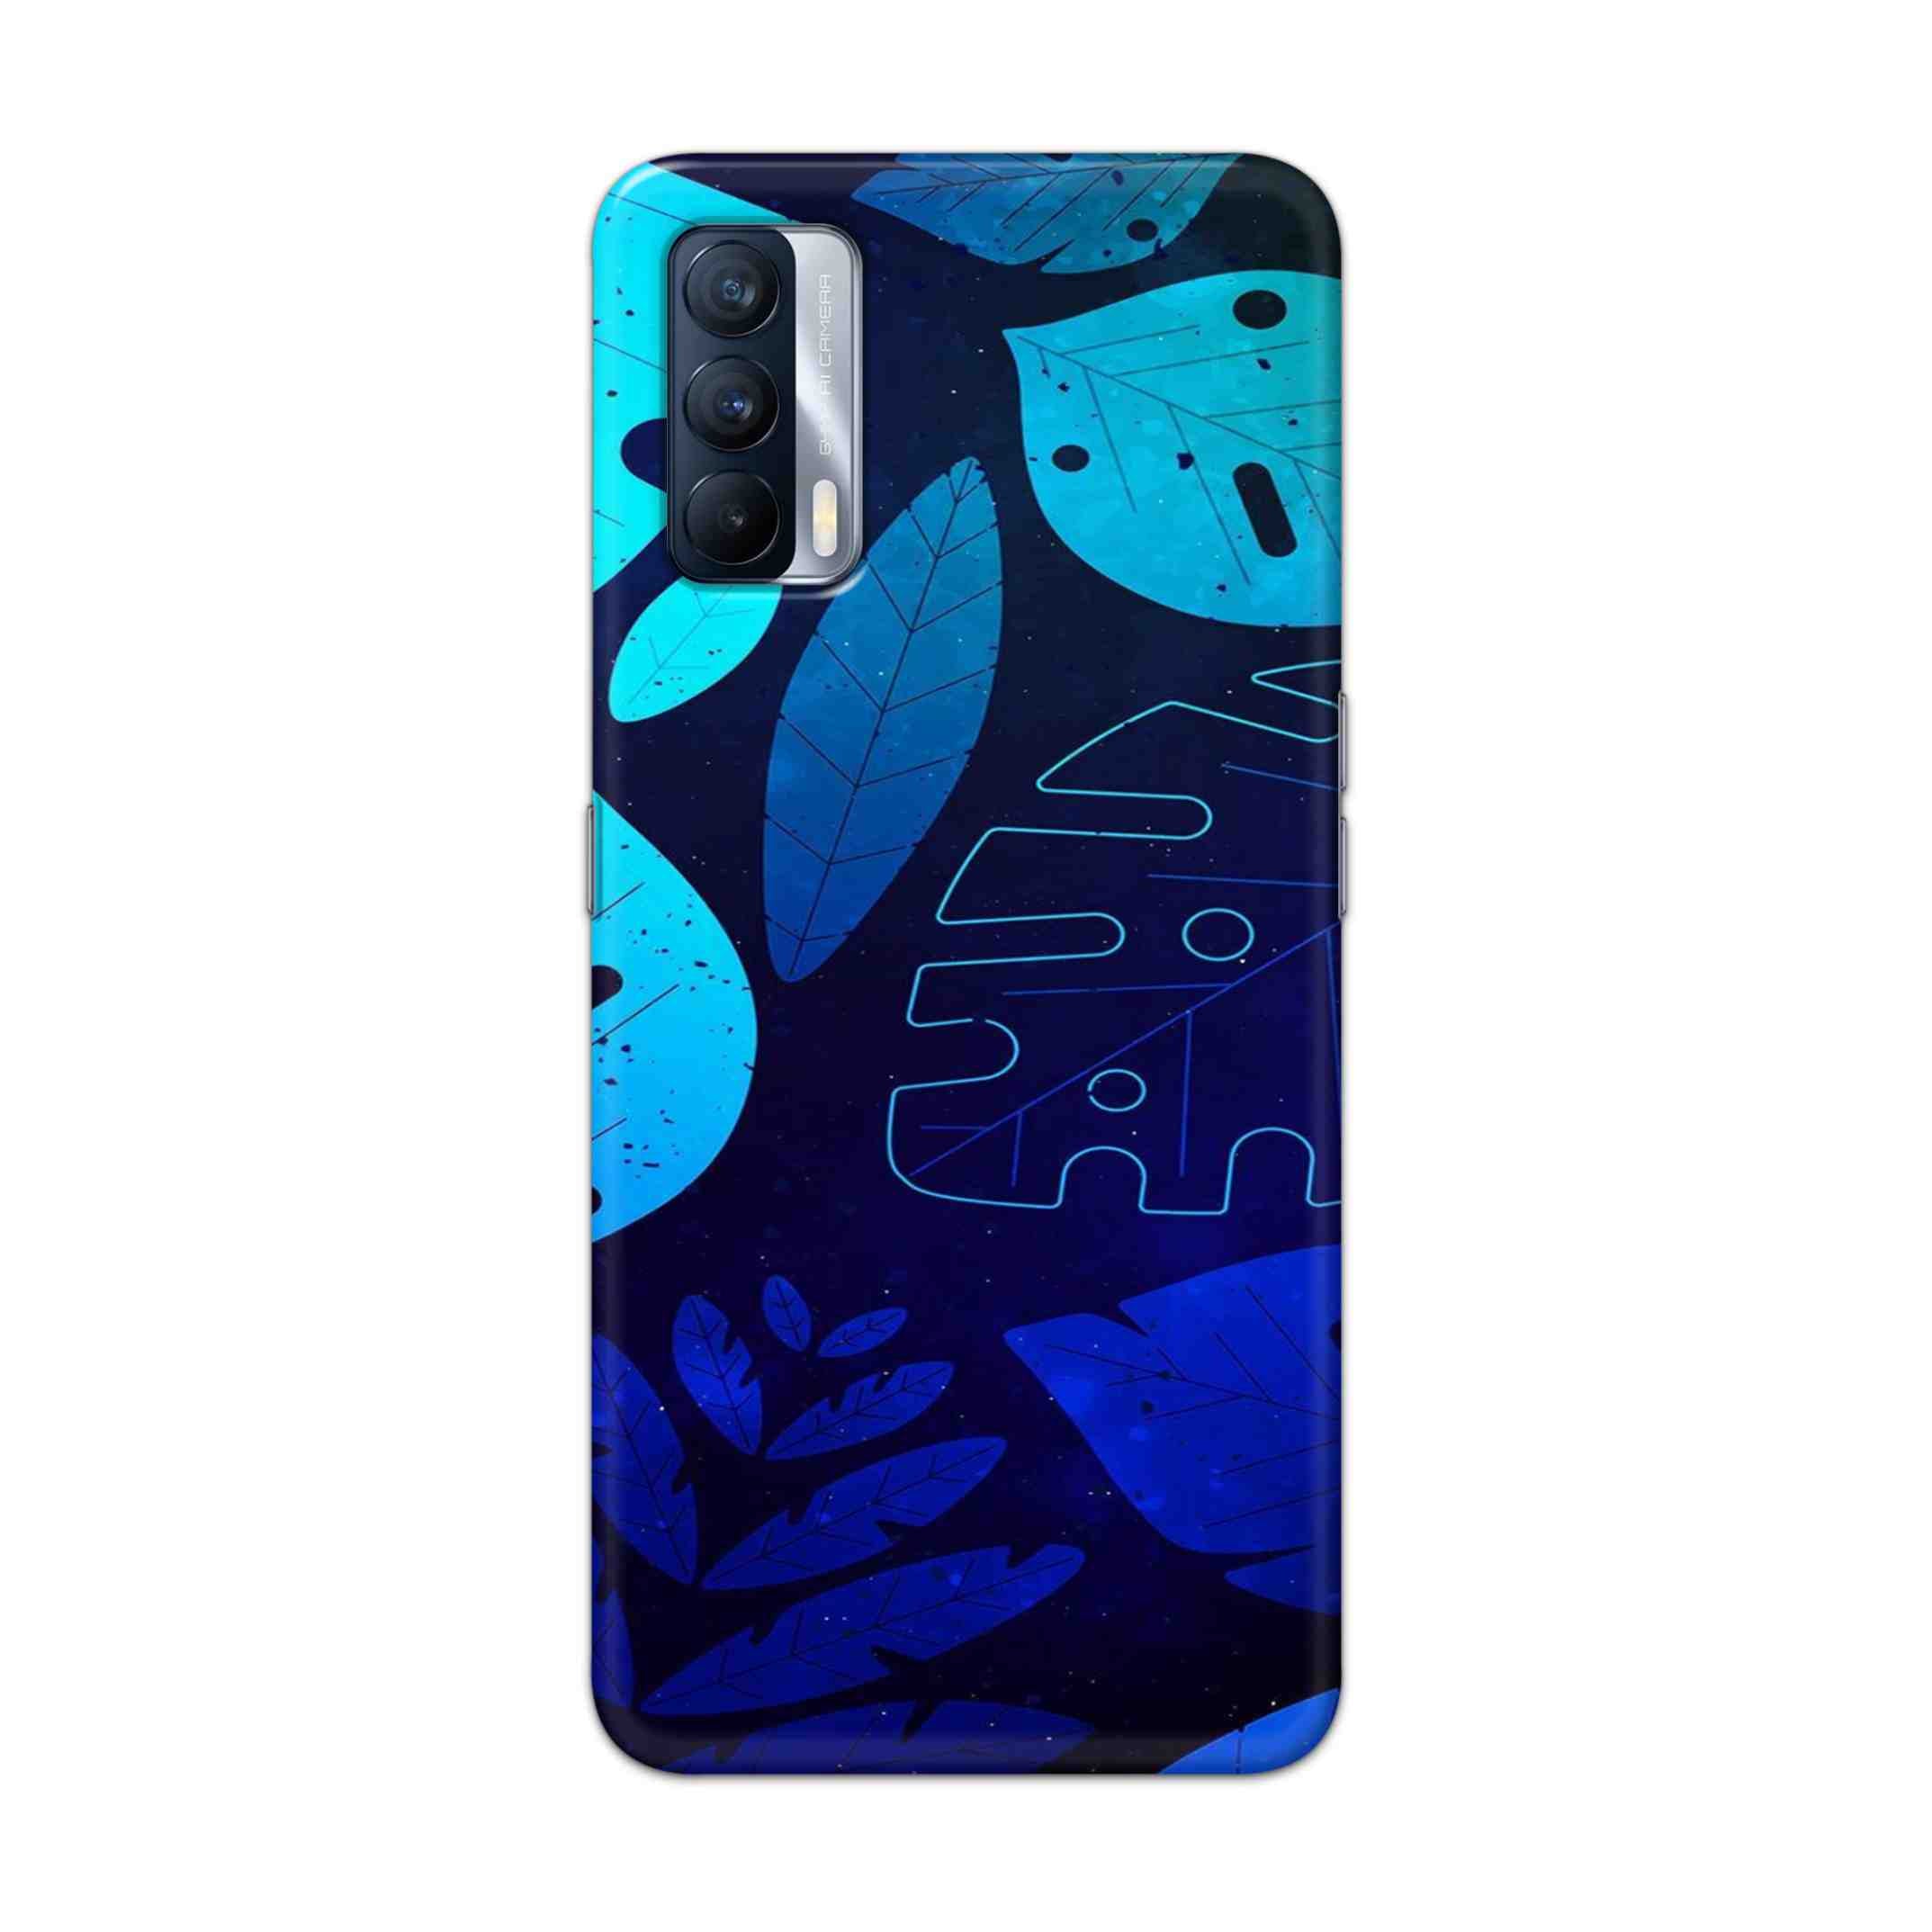 Buy Neon Leaf Hard Back Mobile Phone Case Cover For Realme X7 Online